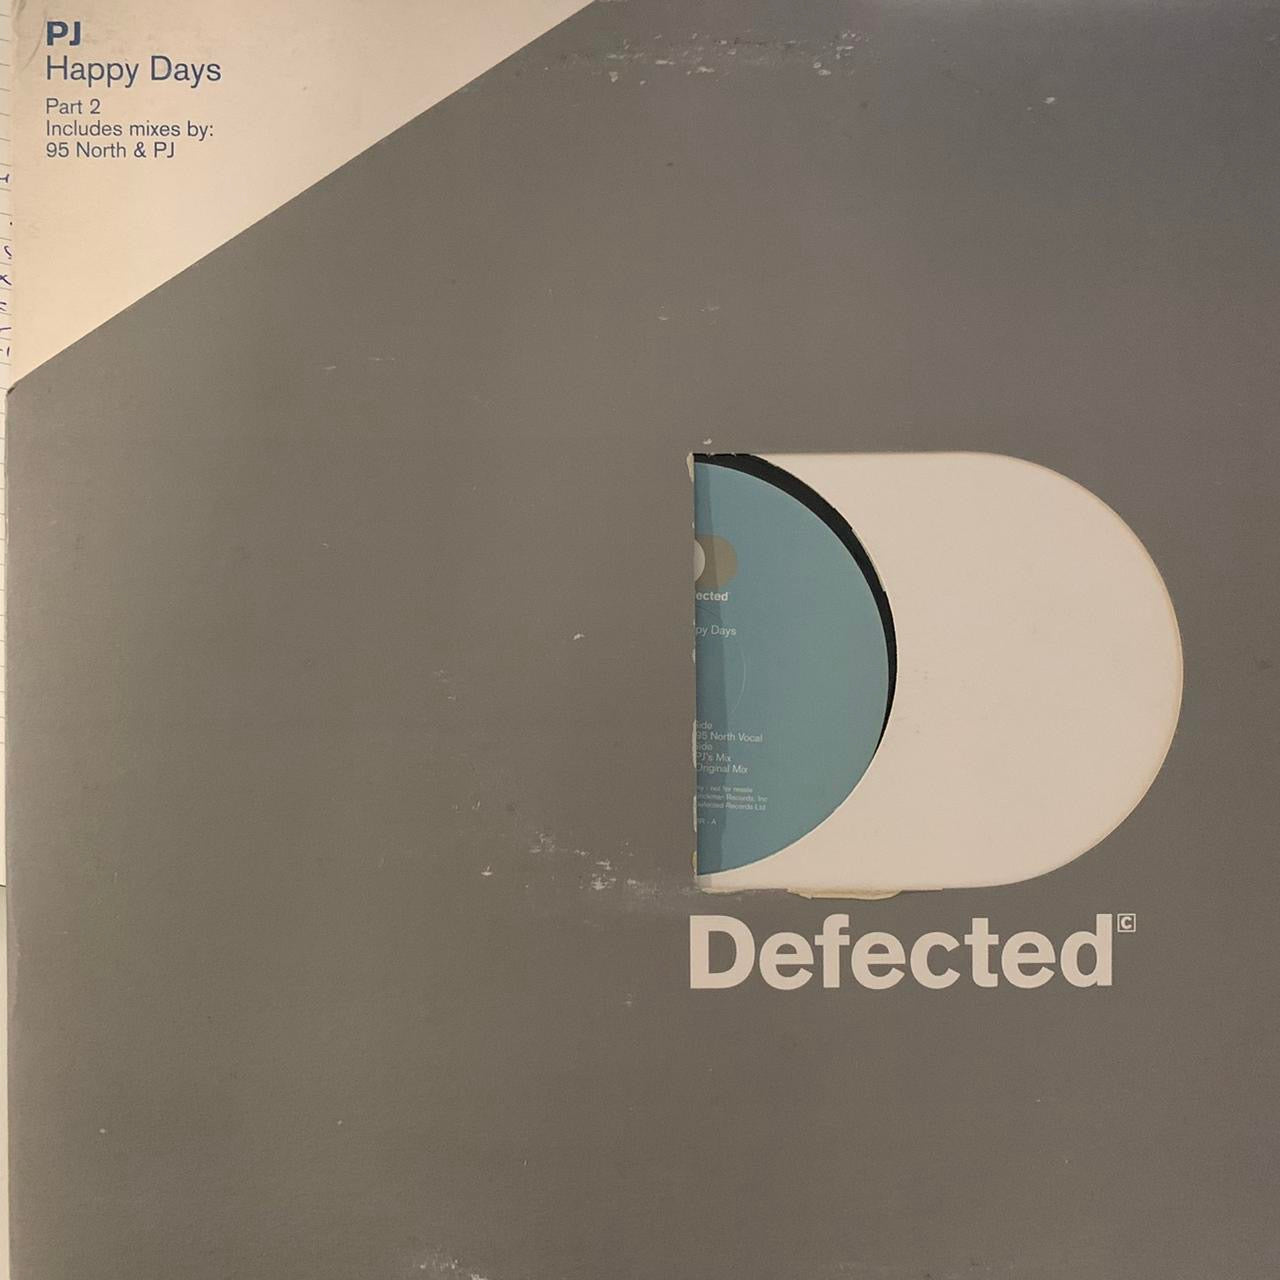 PJ “Happy Days” Part 2, 3 version 12inch Vinyl Single on Defected Records